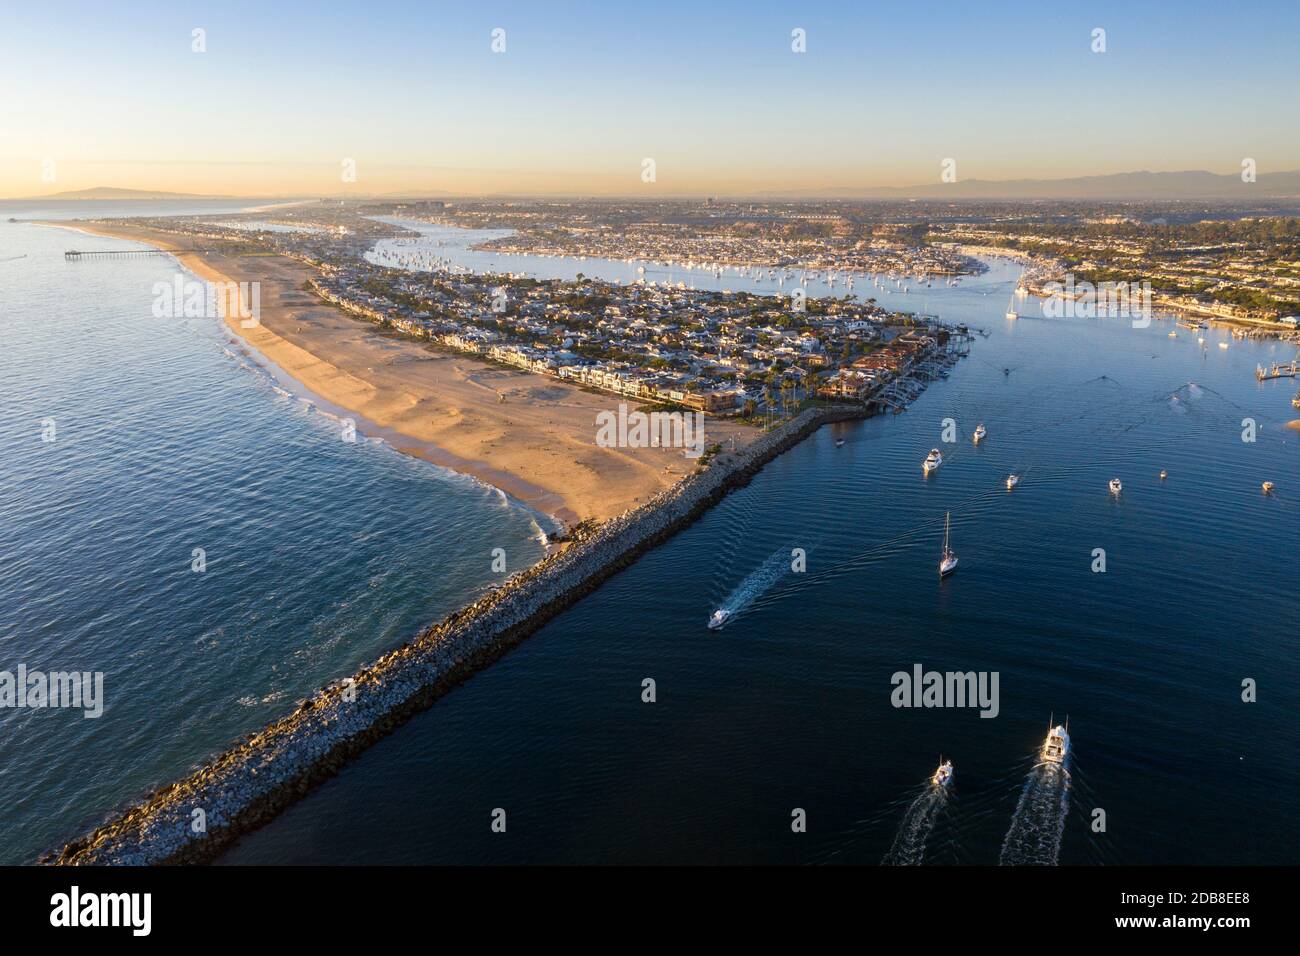 Aerial view of the Balboa Peninsula and Newport Harbor along the Orange County coast Stock Photo